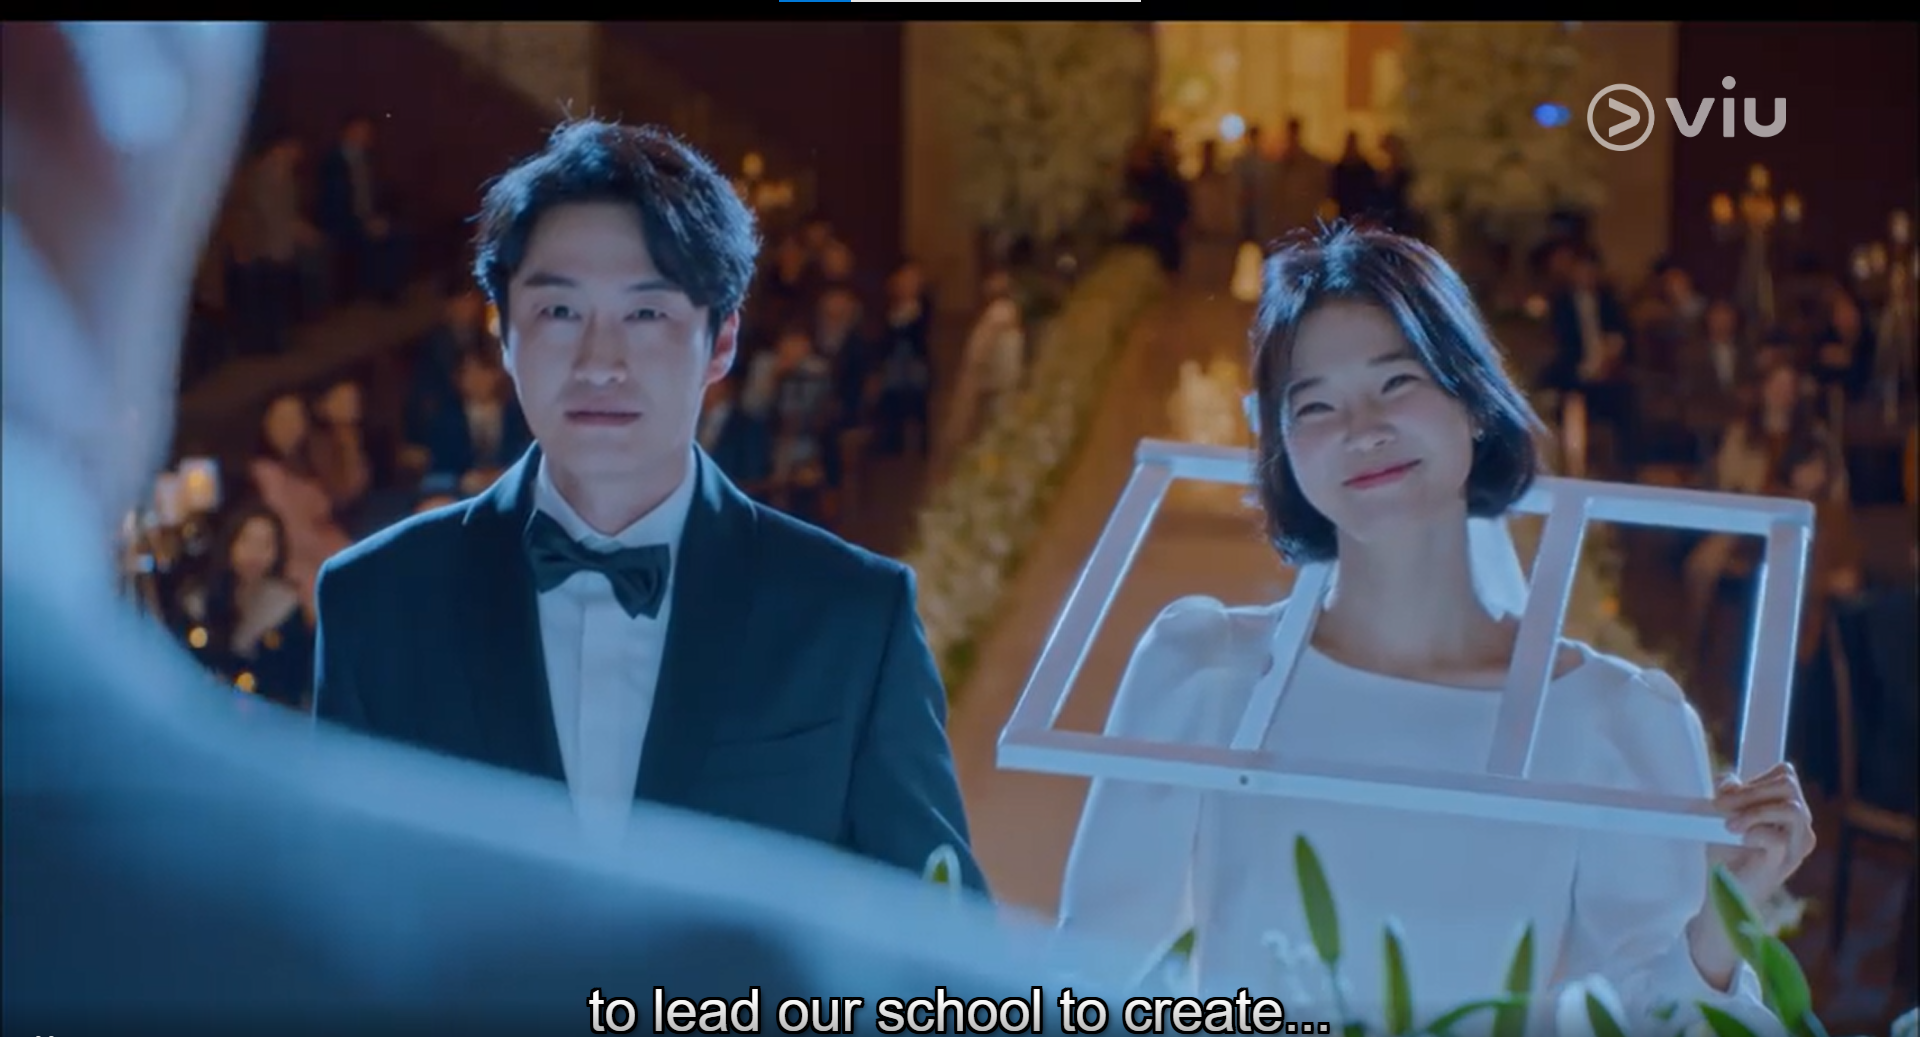 Iconic K-drama Wedding Scenes